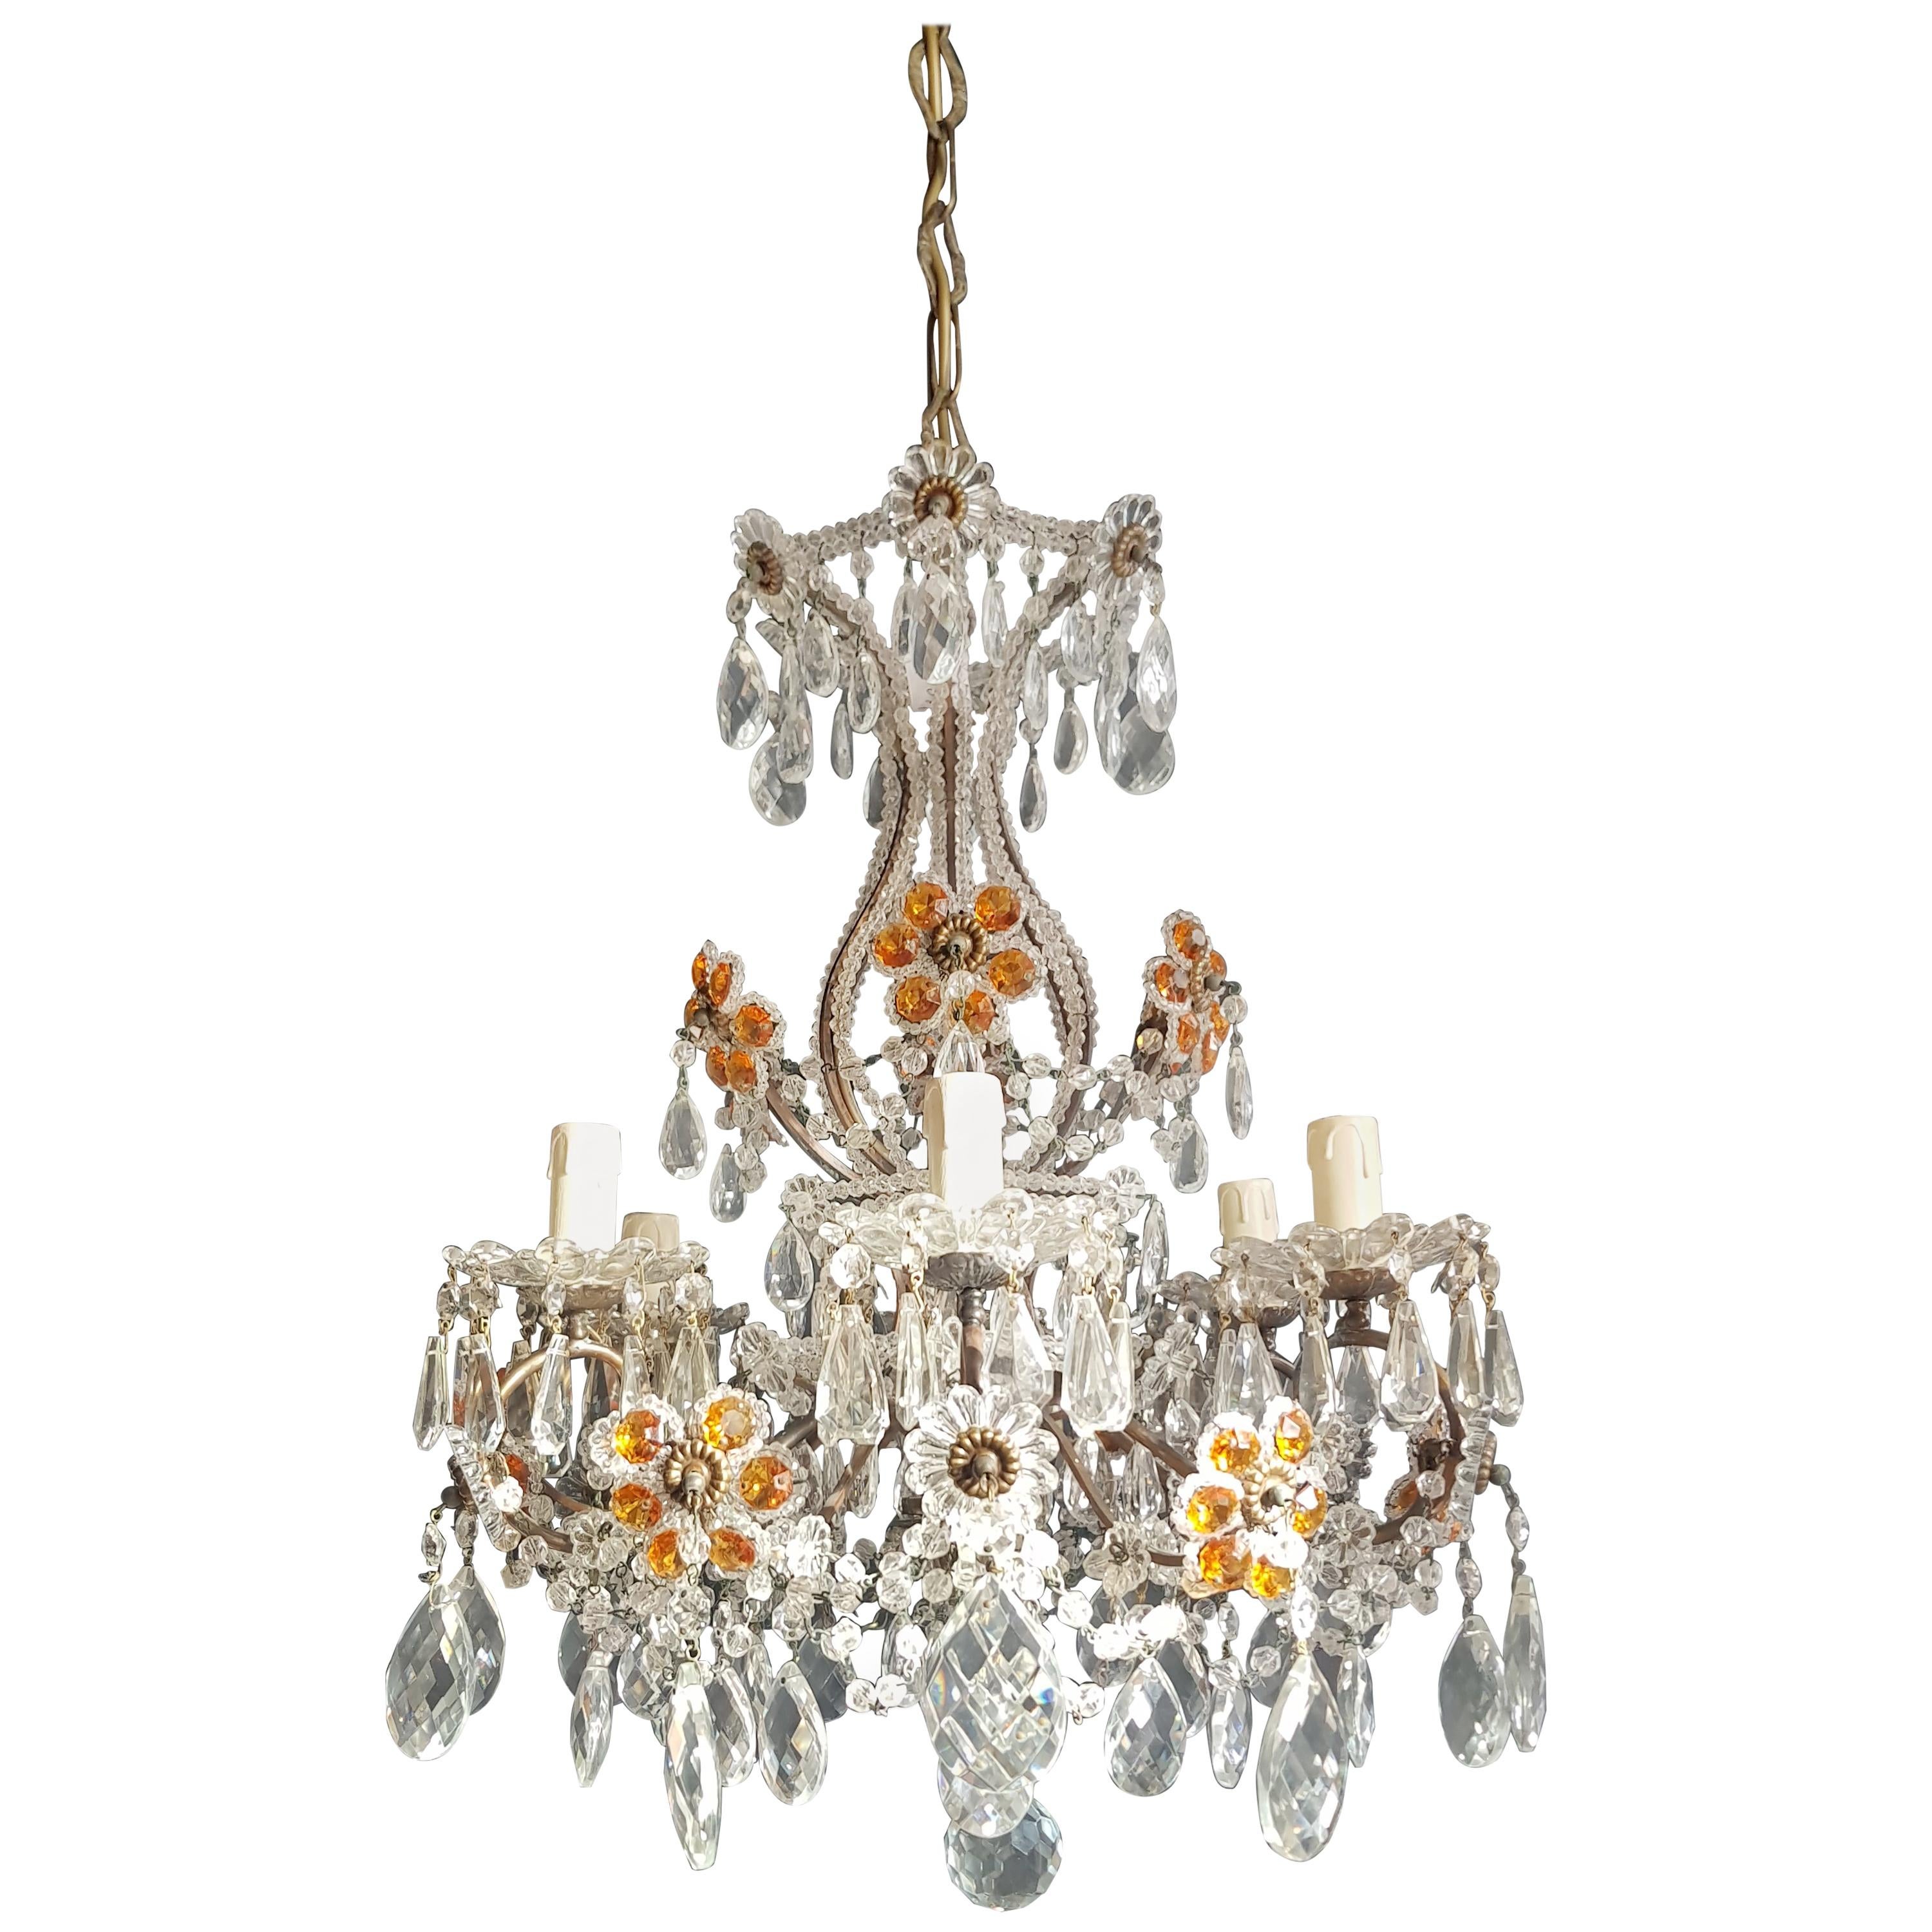 Amber Crystal Antique Chandelier Ceiling Murano Florentiner Lustre Art Nouveau 